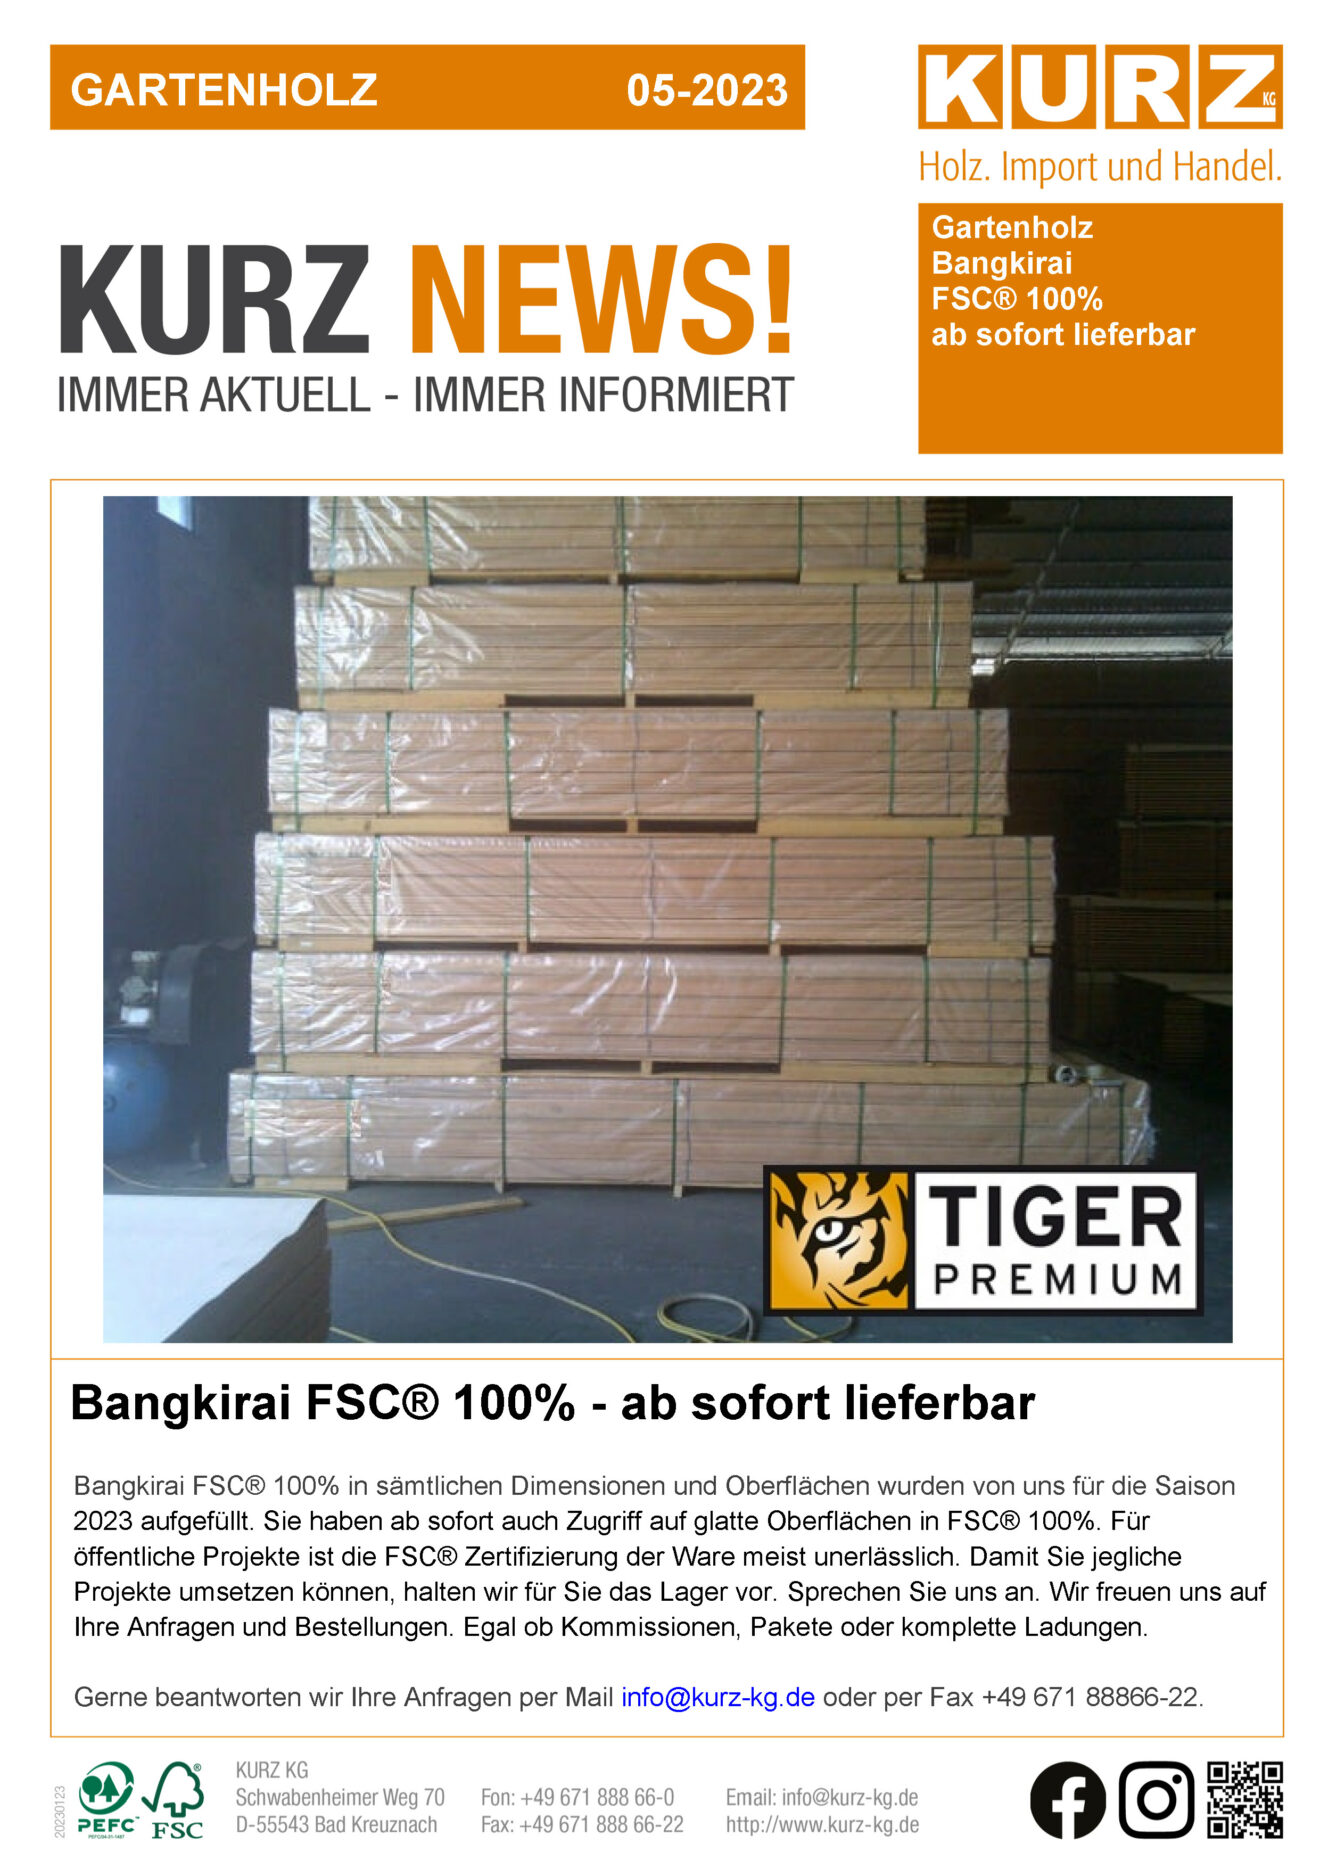 NEWS_KURZ KG_Holz-Import-und-Handel_Bangkirai-FSC-100-lieferbar_05_2023